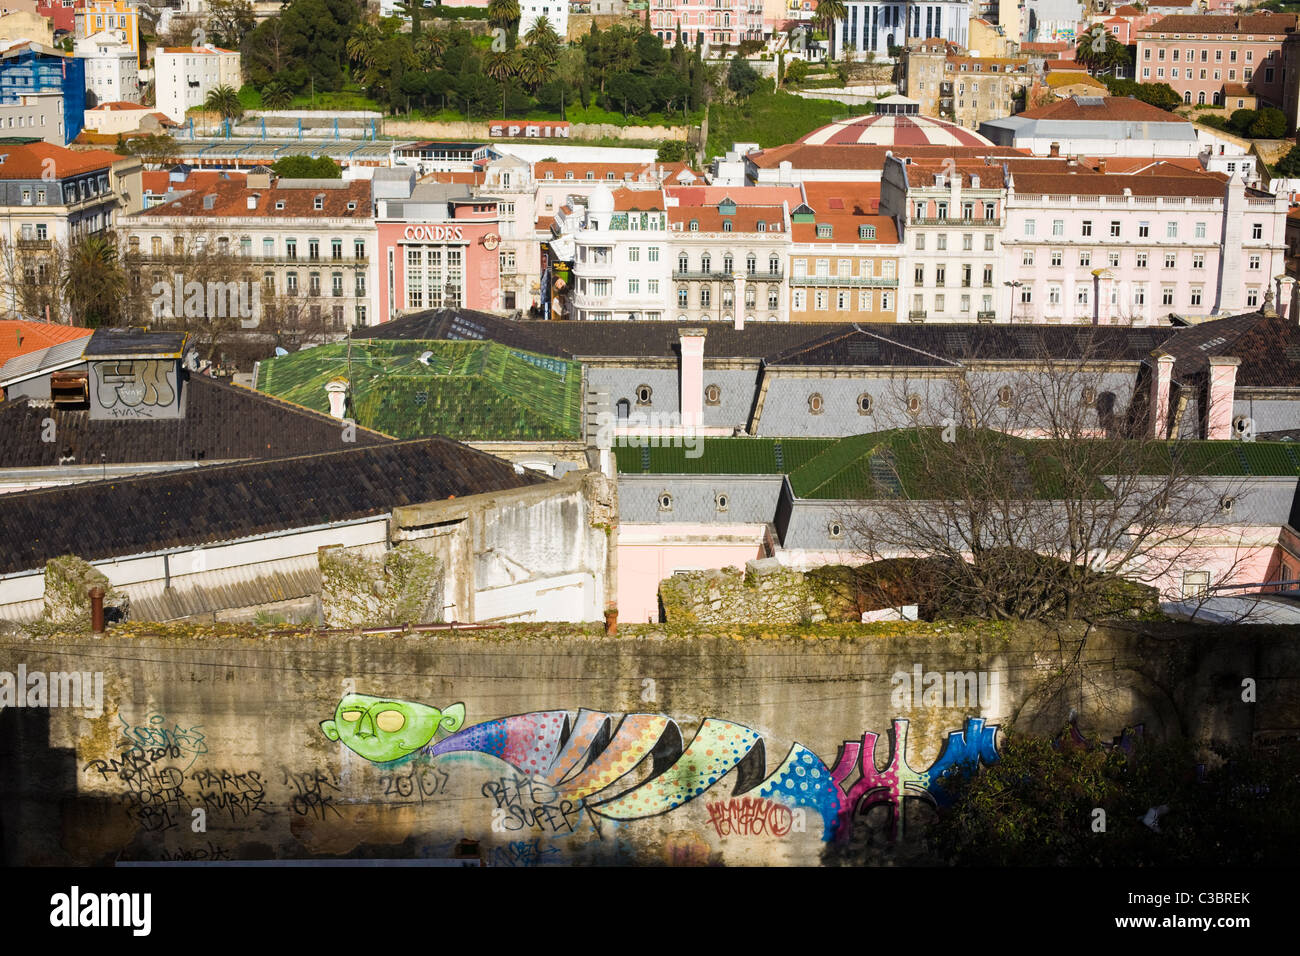 Lisbon, Portugal skyline with graffiti Stock Photo